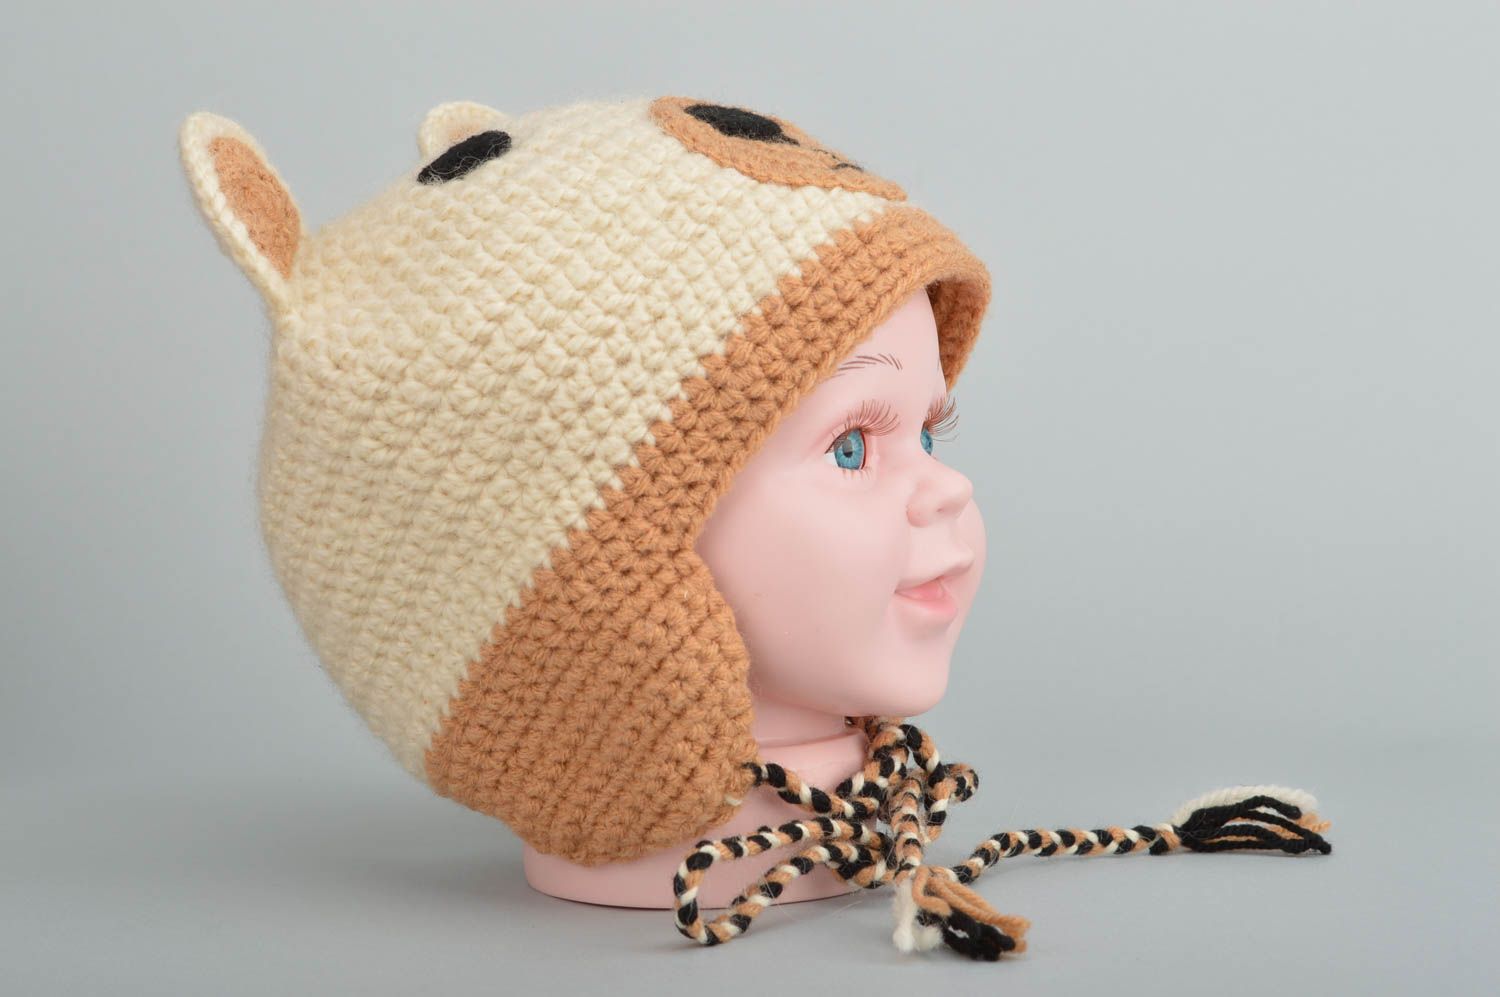 Crocheted beautiful unusual cute cap brown bear on strings 370 mm for kids photo 3